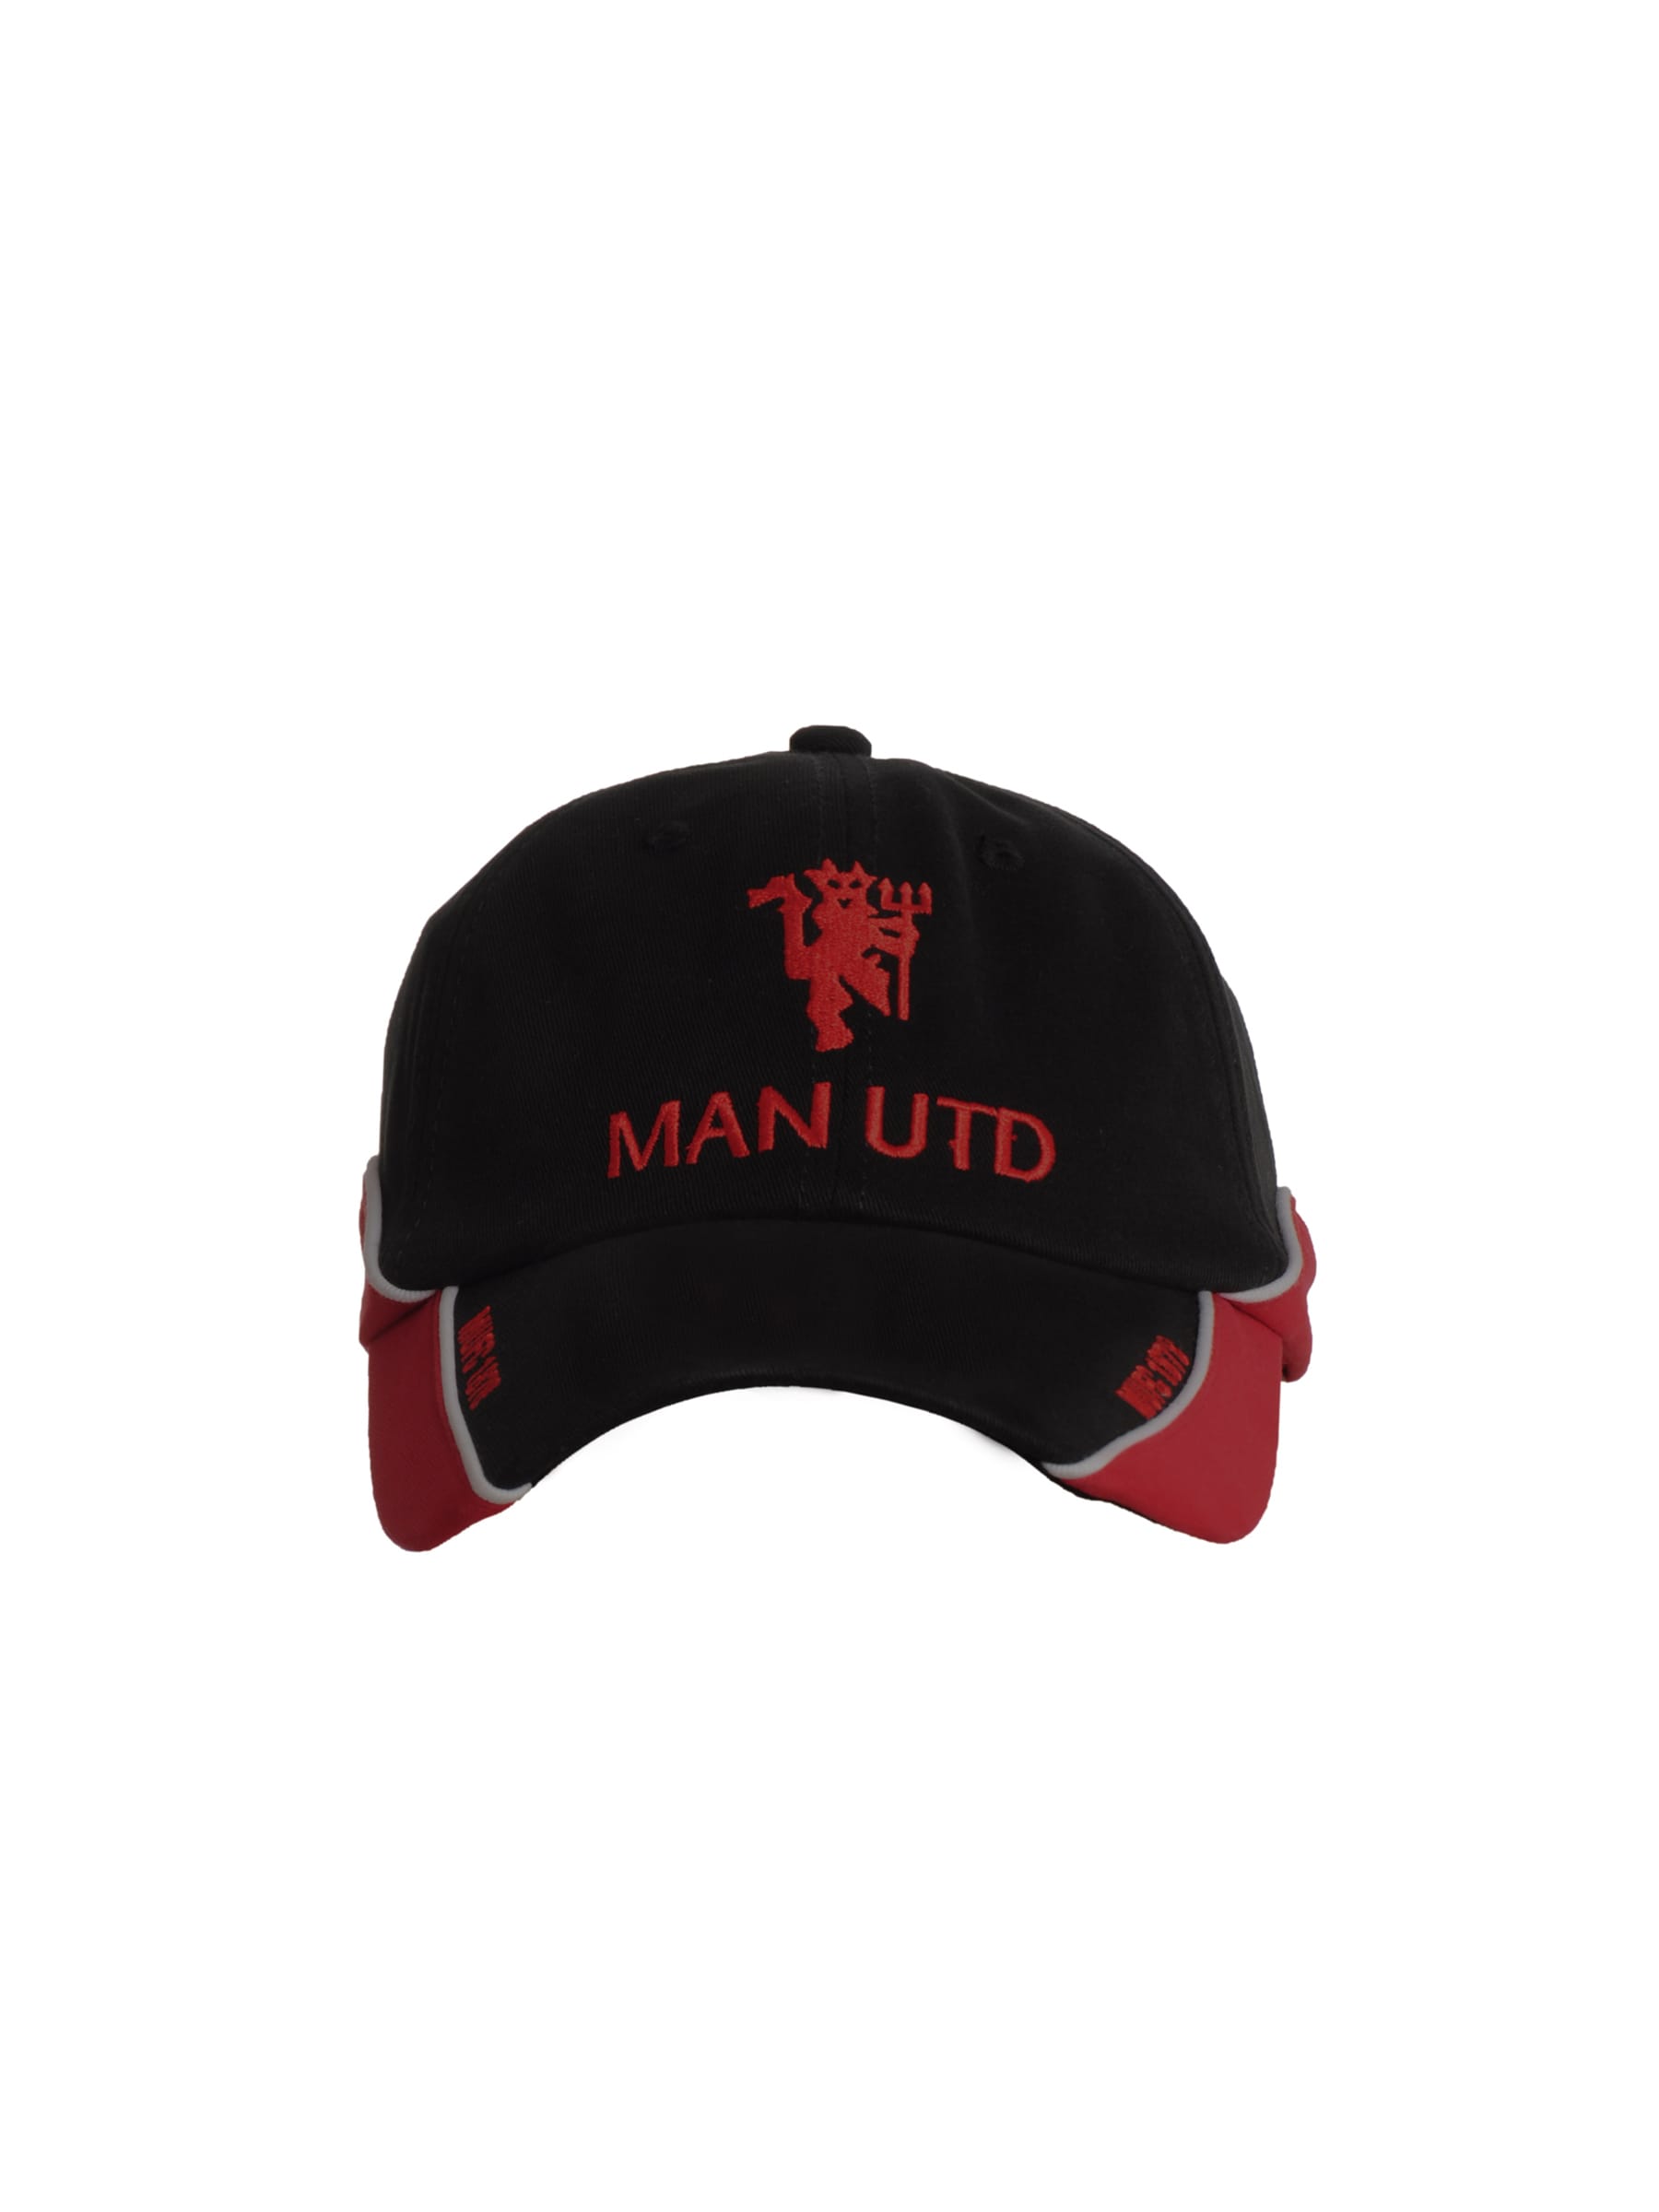 Manchester United Men Solid Black Cap